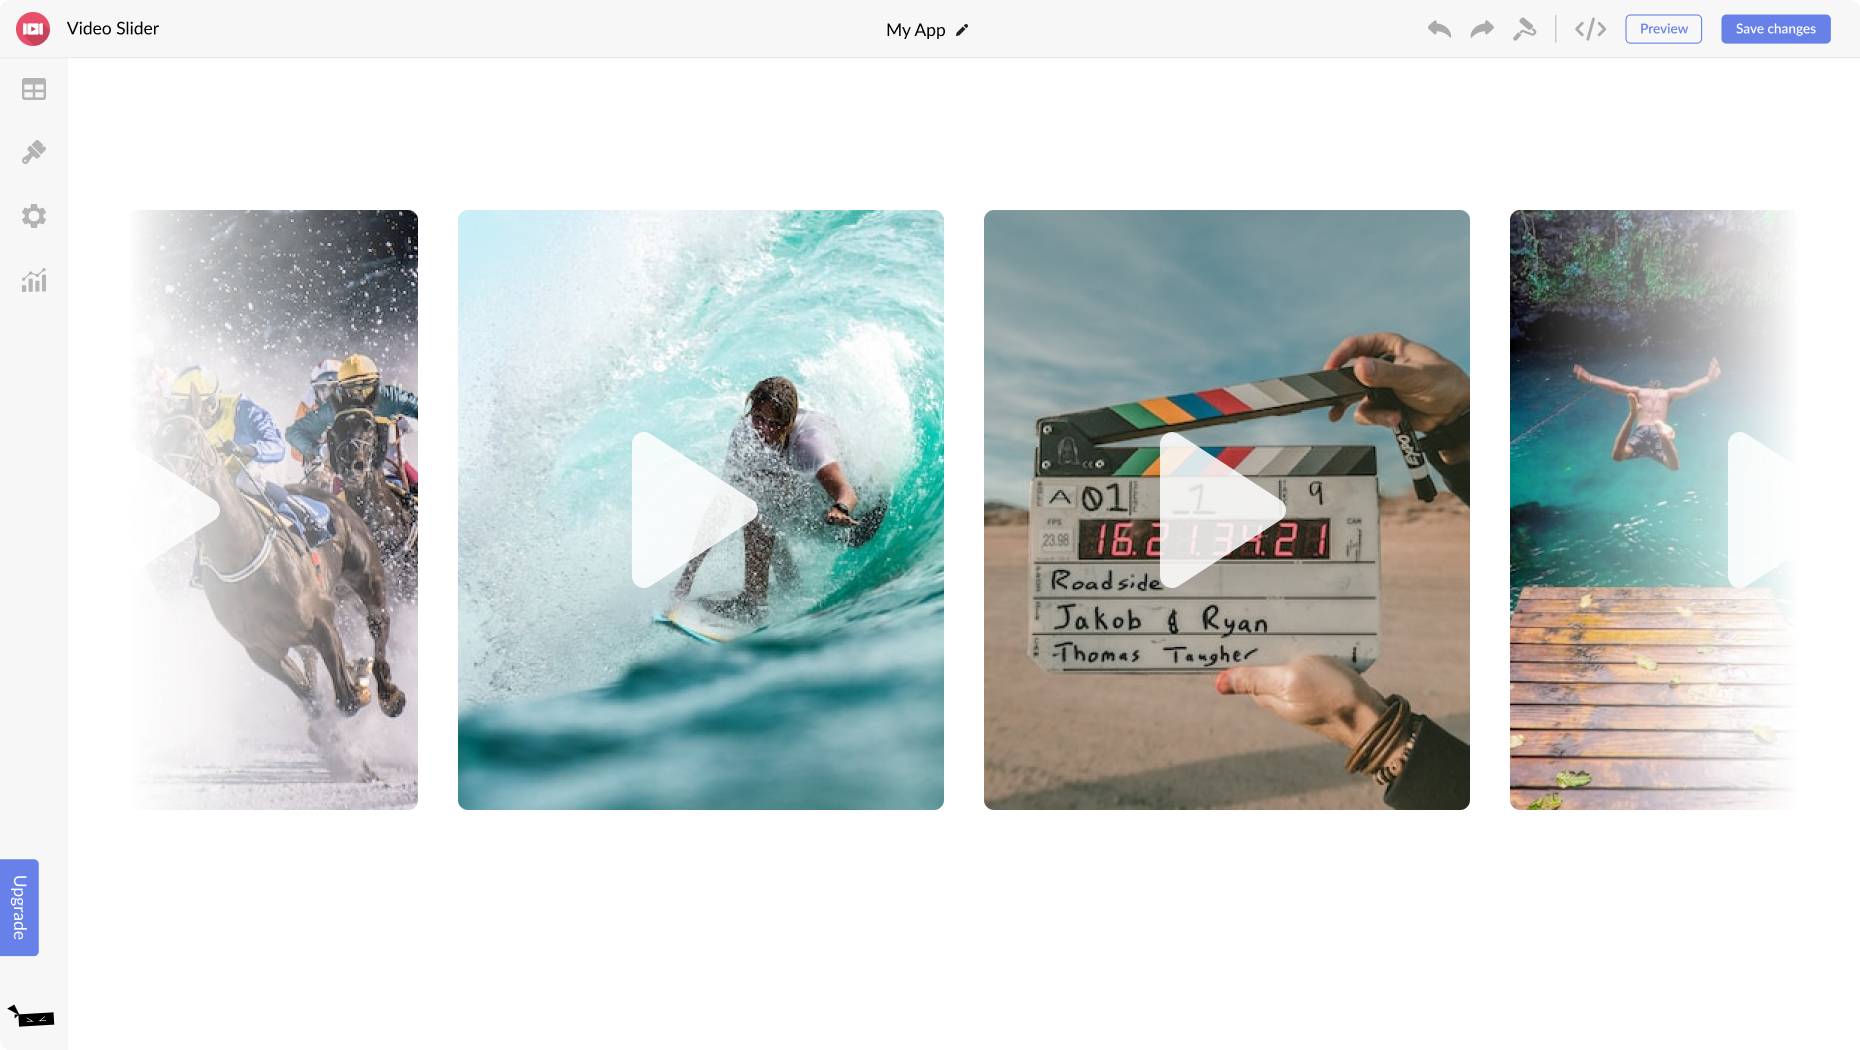 Video Slider